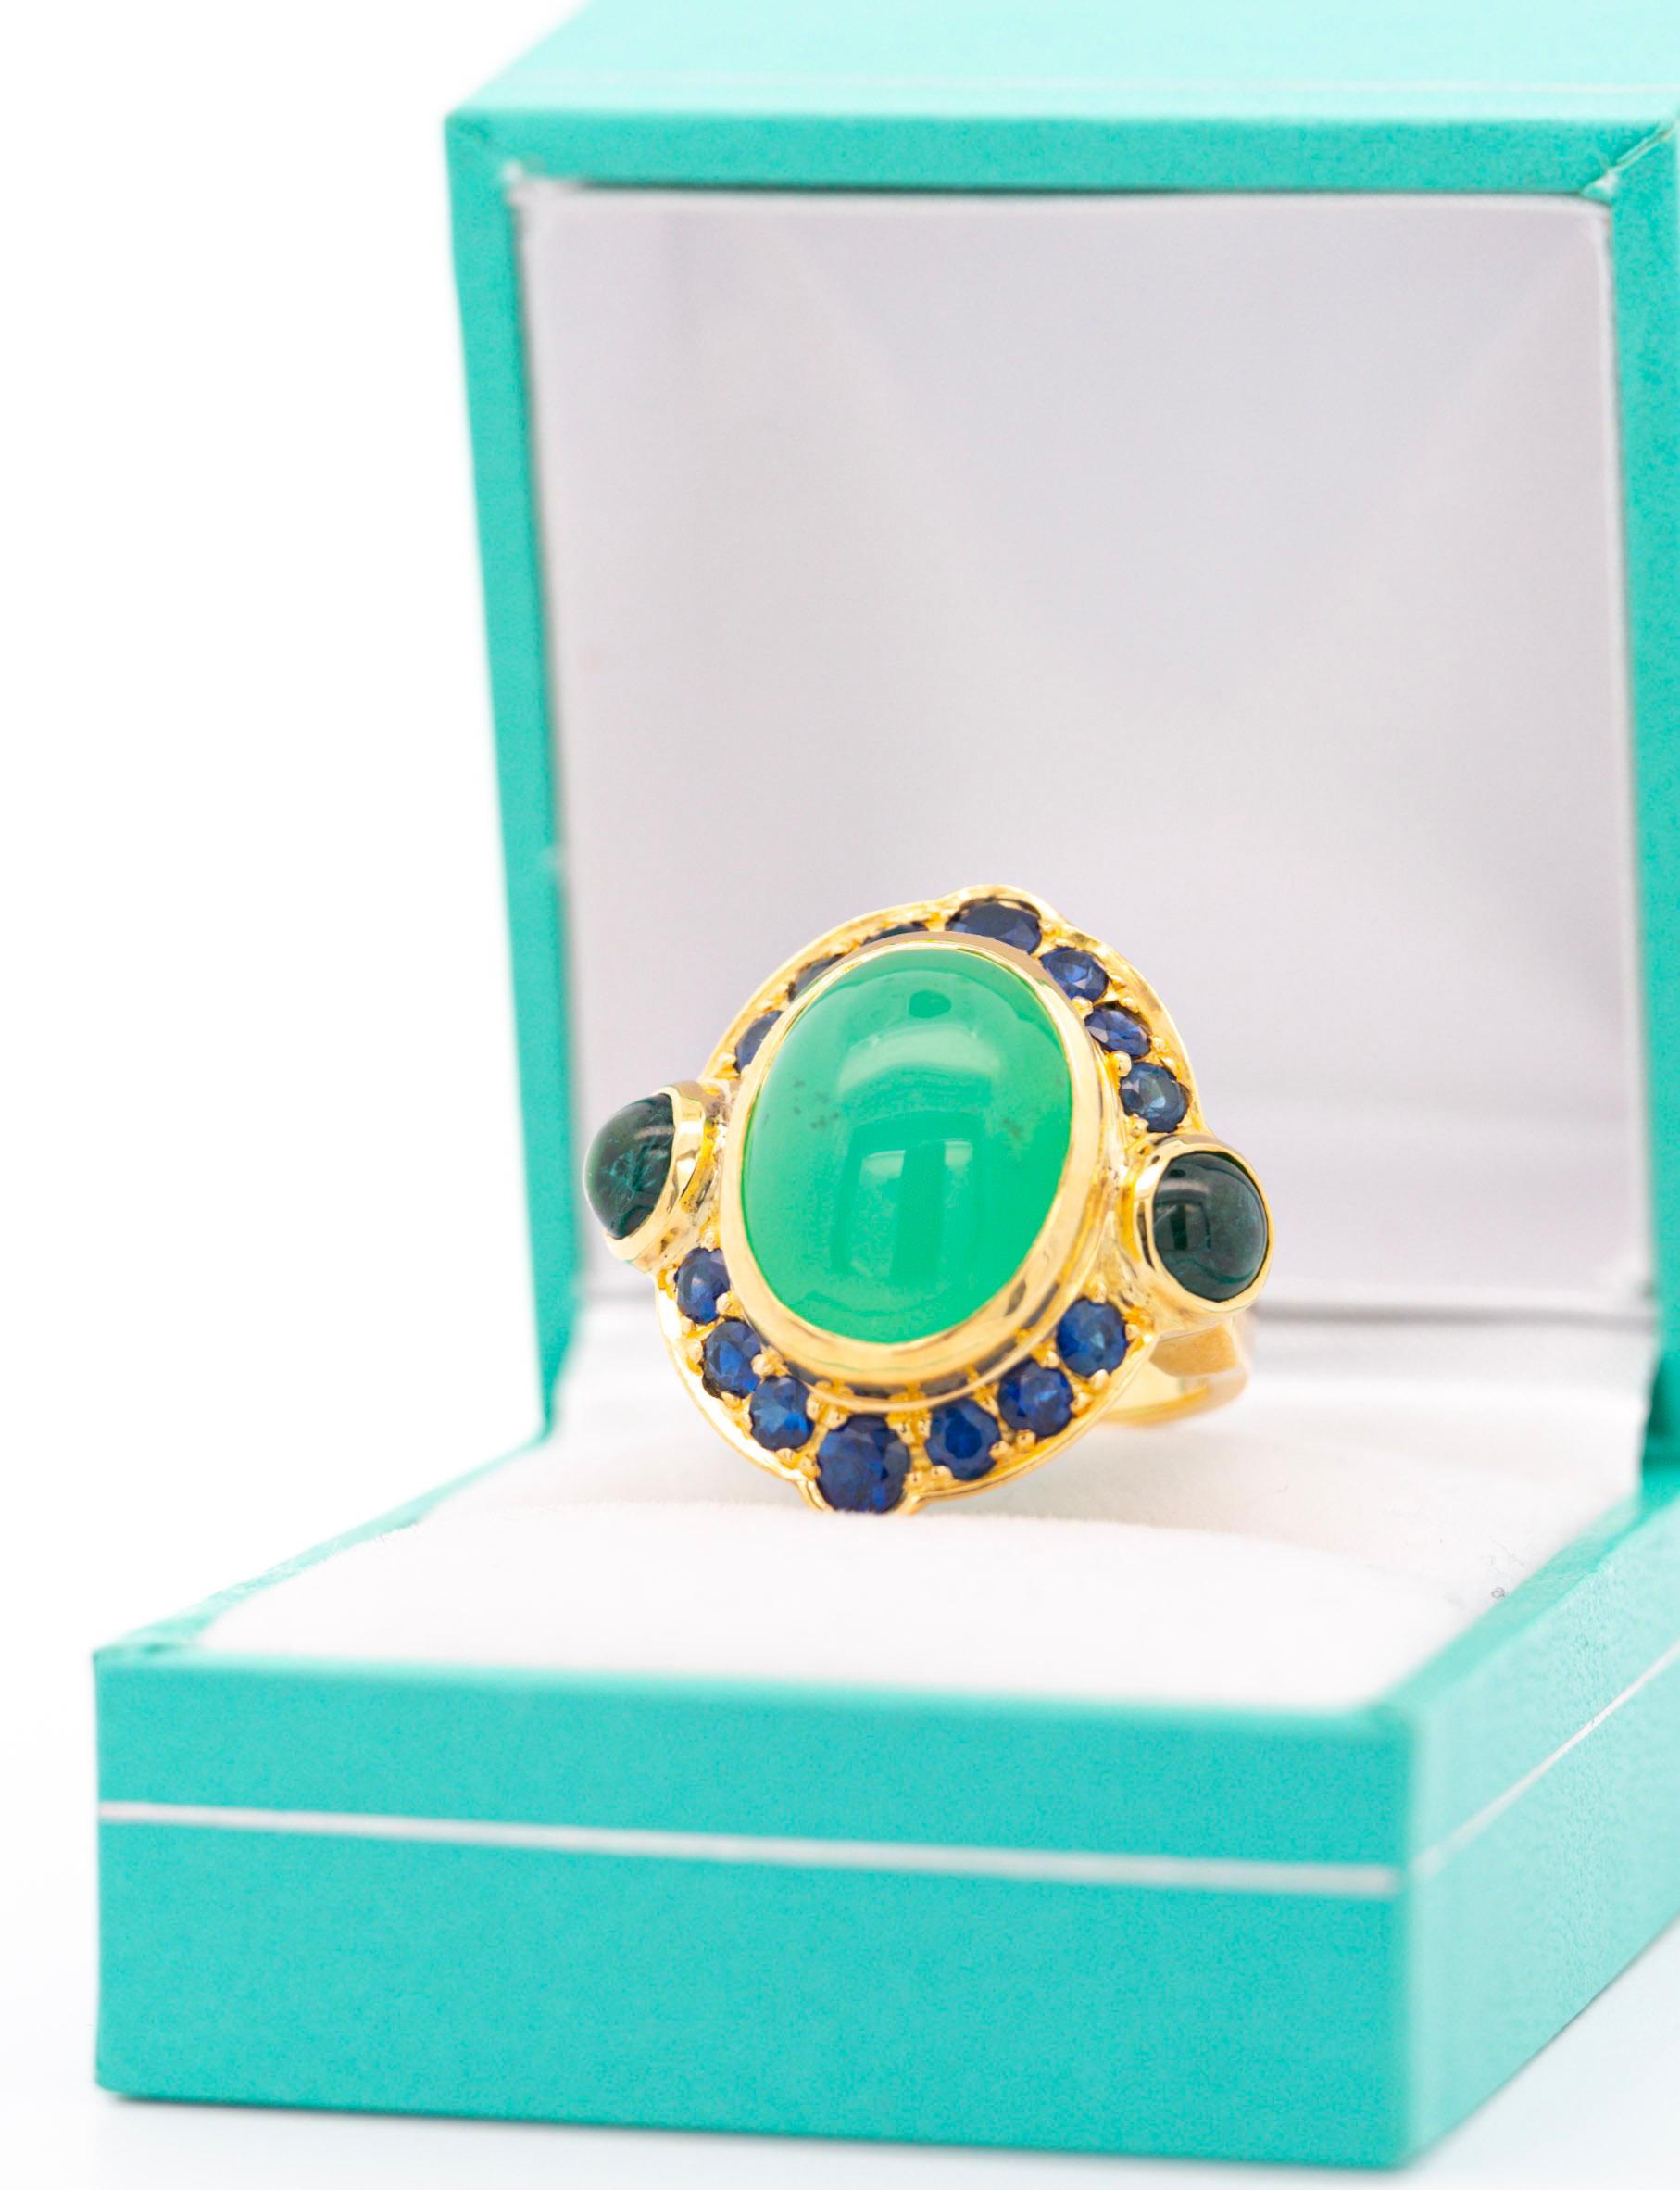 Women's Vintage 12 Carat Cabochon Cut Chalcedony Quartz & Sapphire Ring in 14K Gold Ring